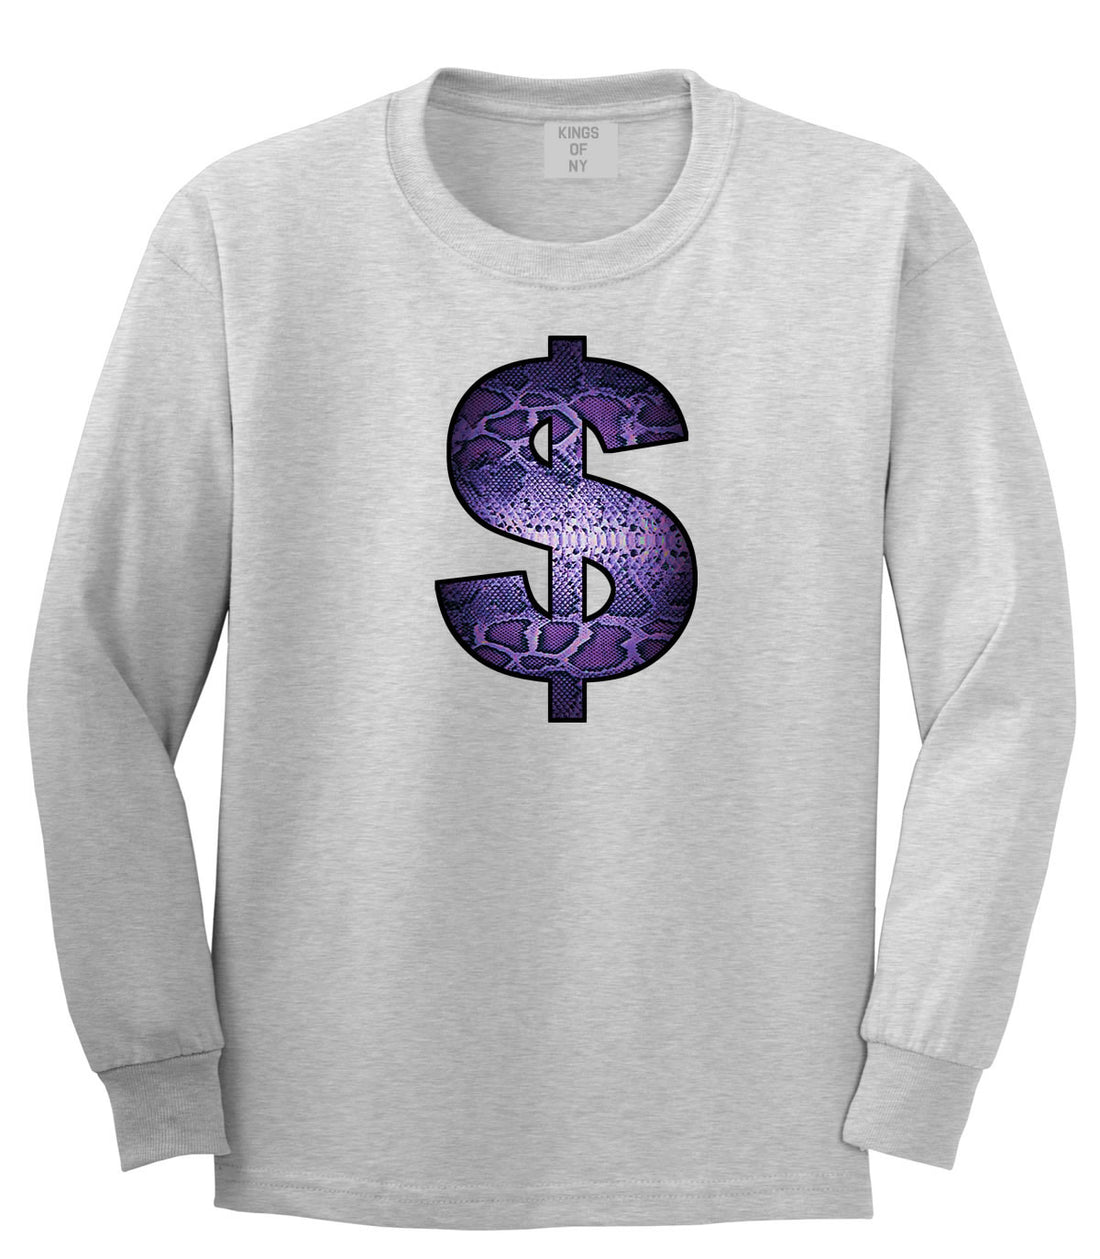 Snakeskin Money Sign Purple Animal Print Long Sleeve Boys Kids T-Shirt In Grey by Kings Of NY